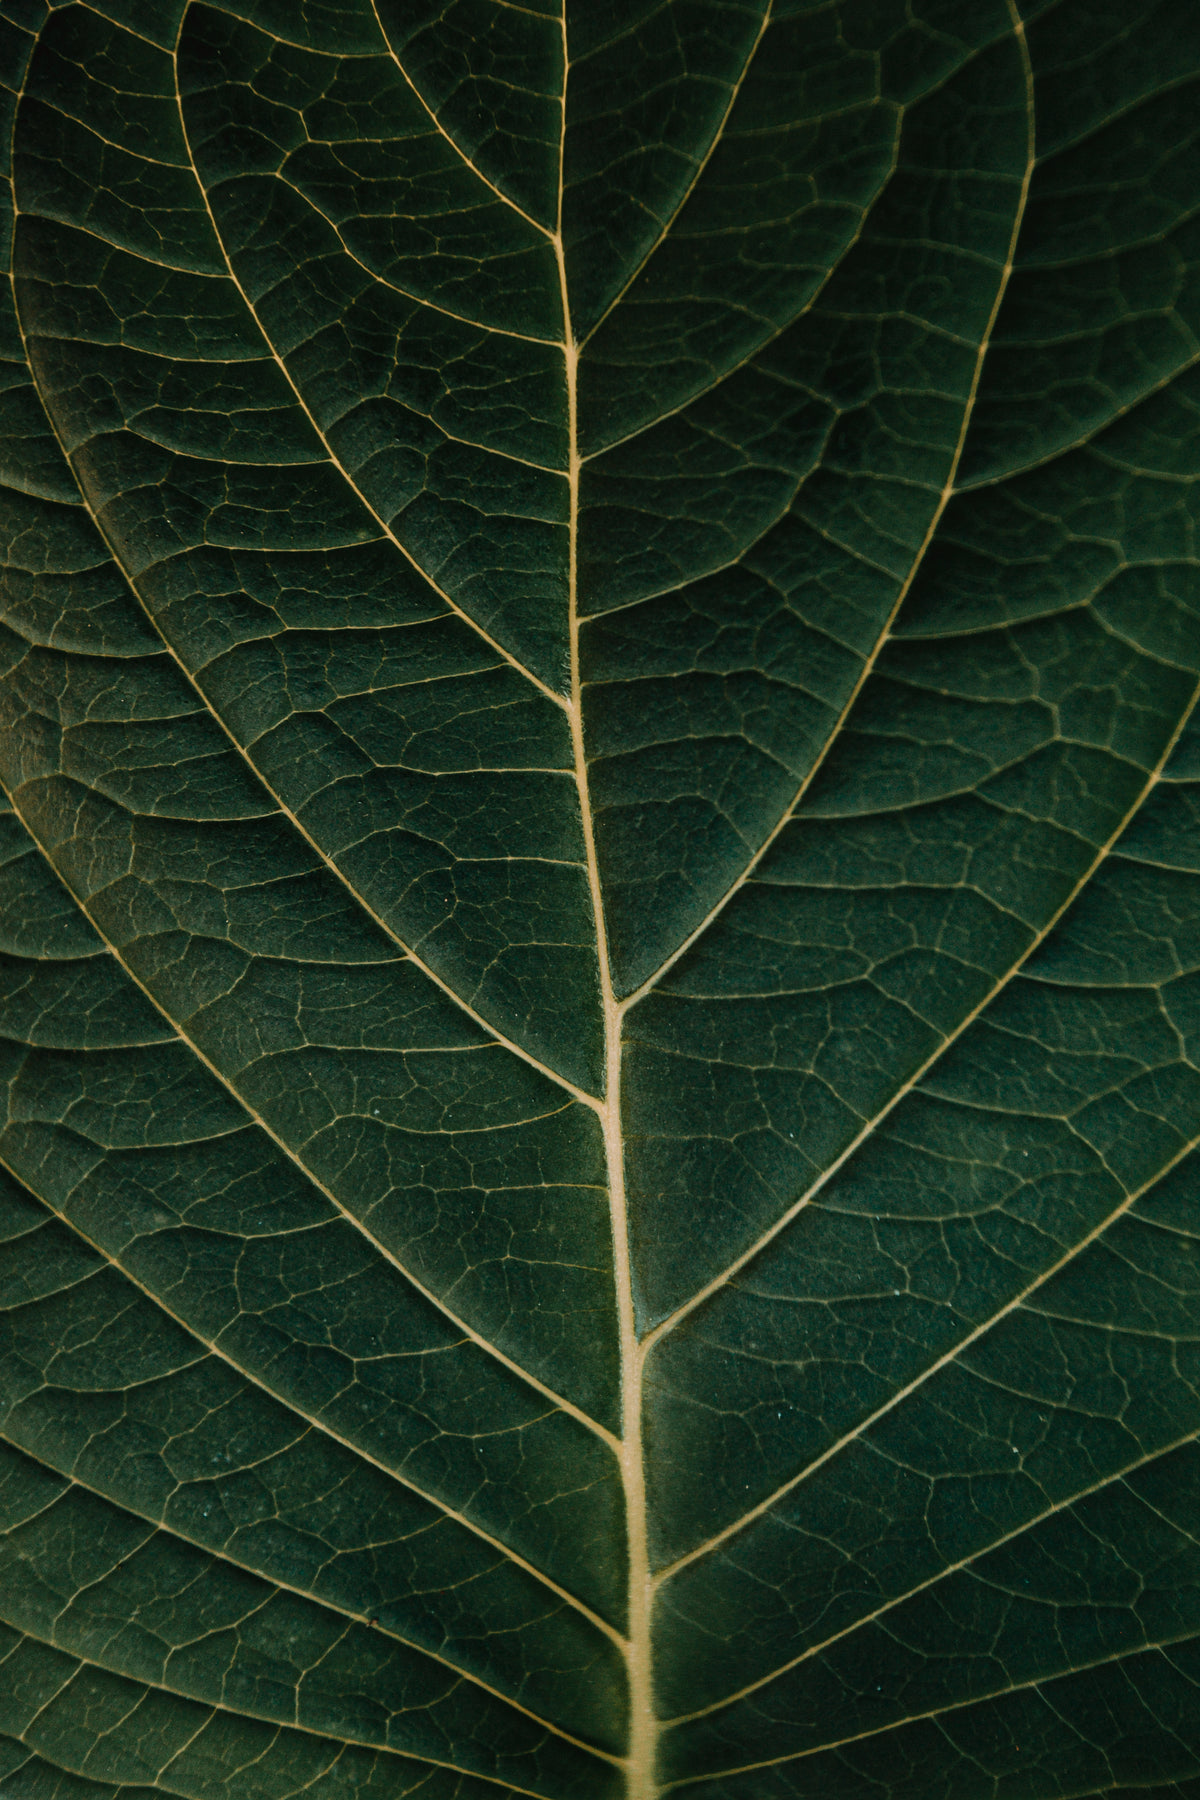 dark green leaf showing the details